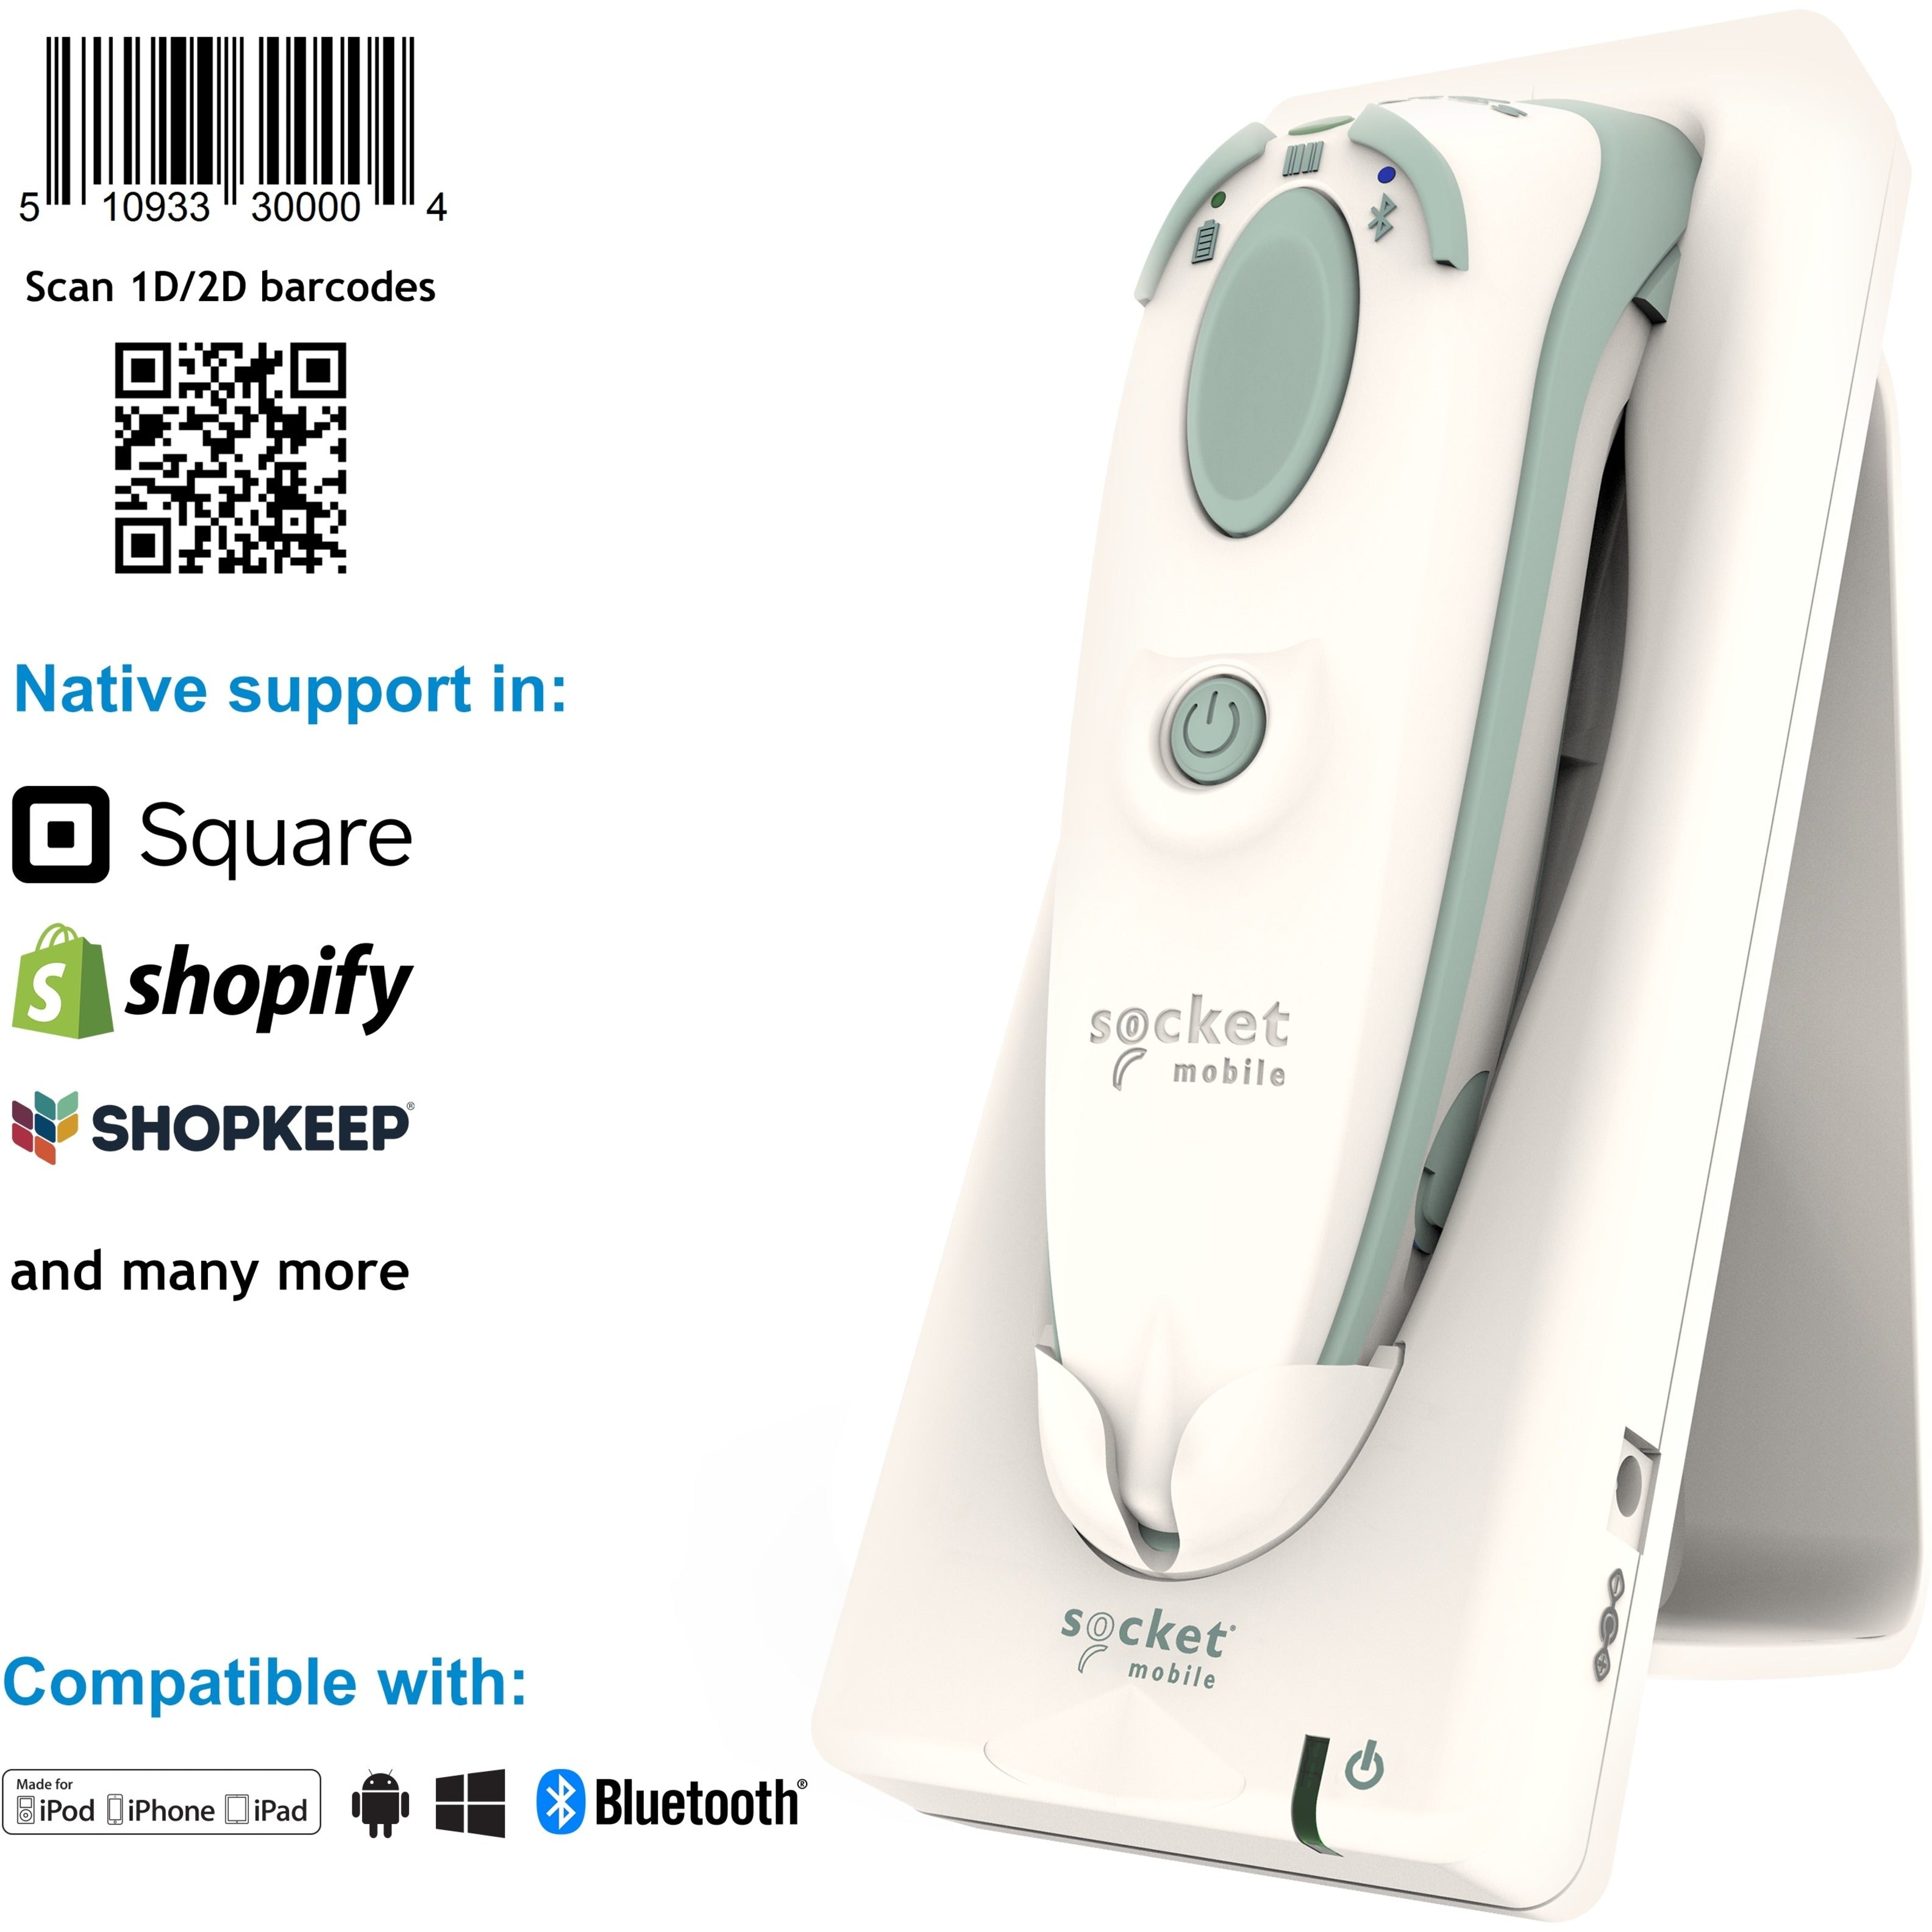 Socket Mobile CX3865-2898 DuraScan D755 Healthcare Ultimate Bluetooth Scanner, Wireless 2D/1D Barcode Scanner